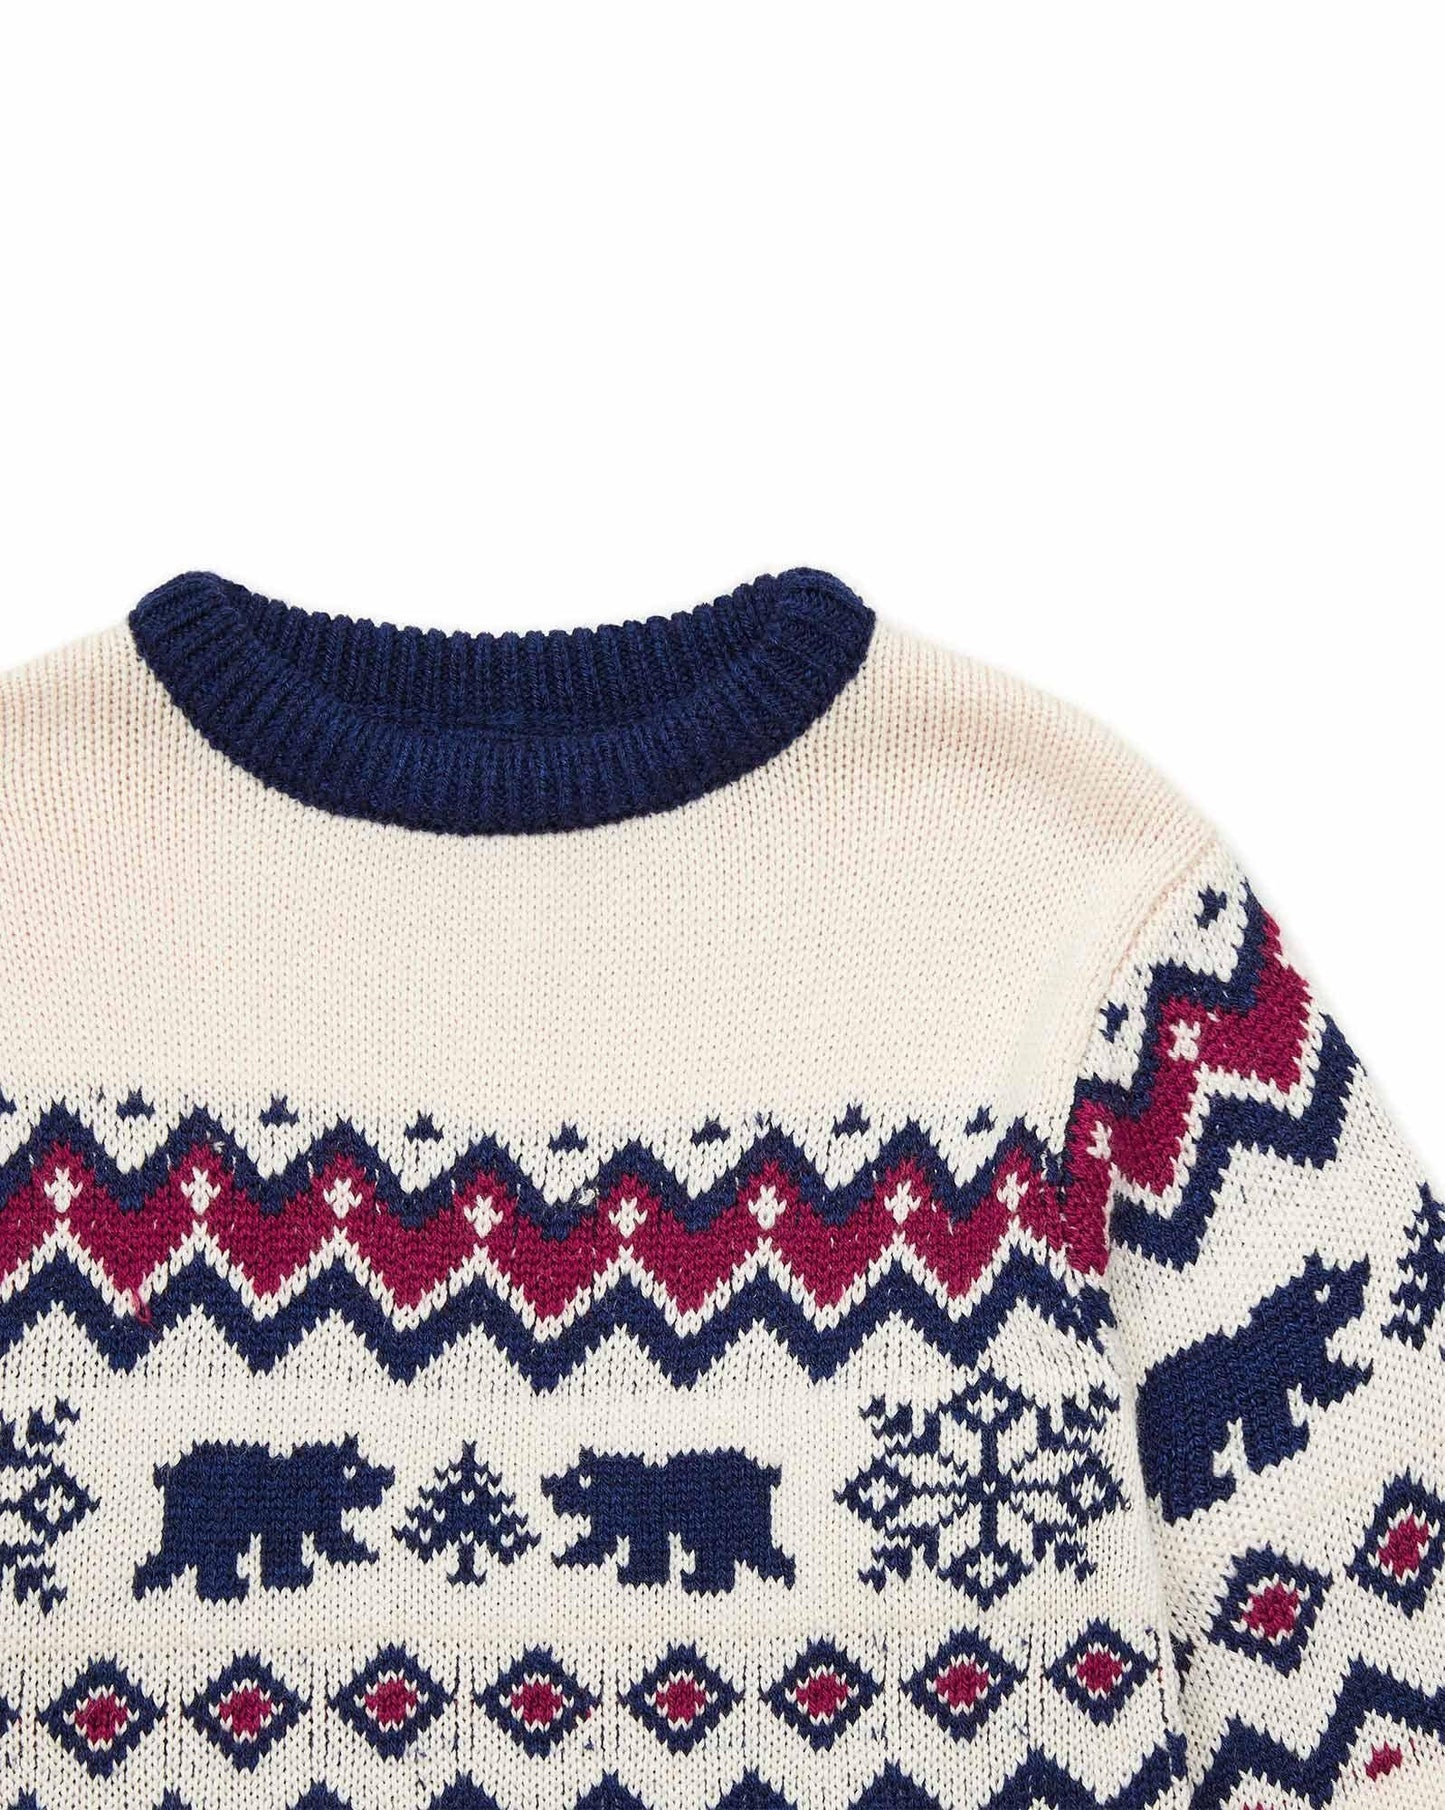 Sweater - Boy in jacquard knitting